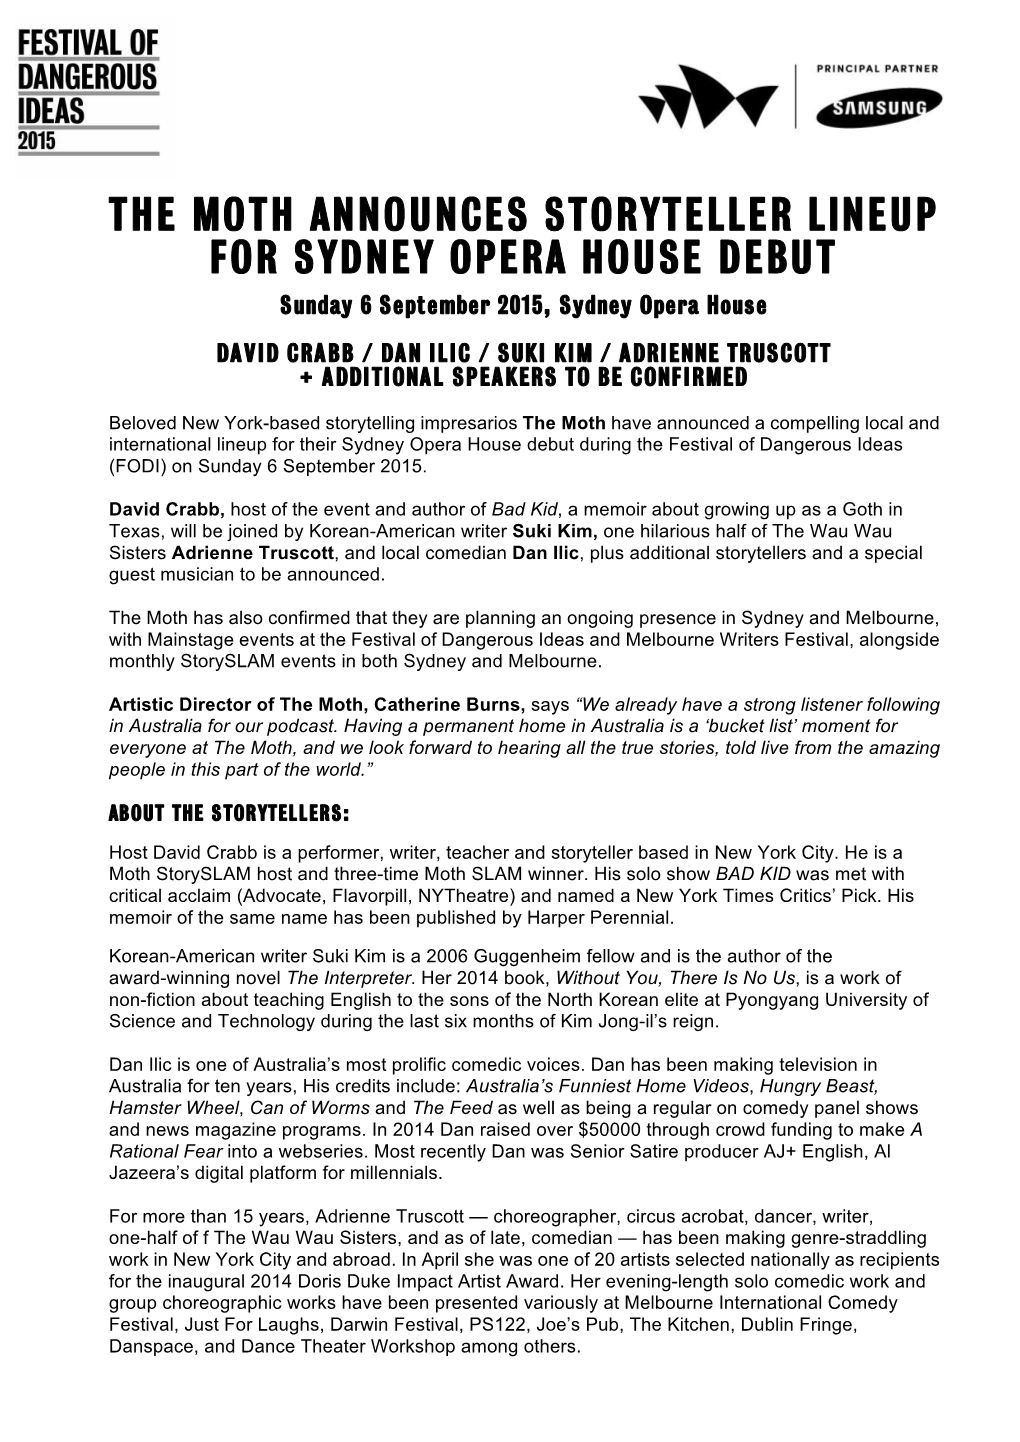 The Moth Announces Storyteller Lineup for Sydney Opera House Debut